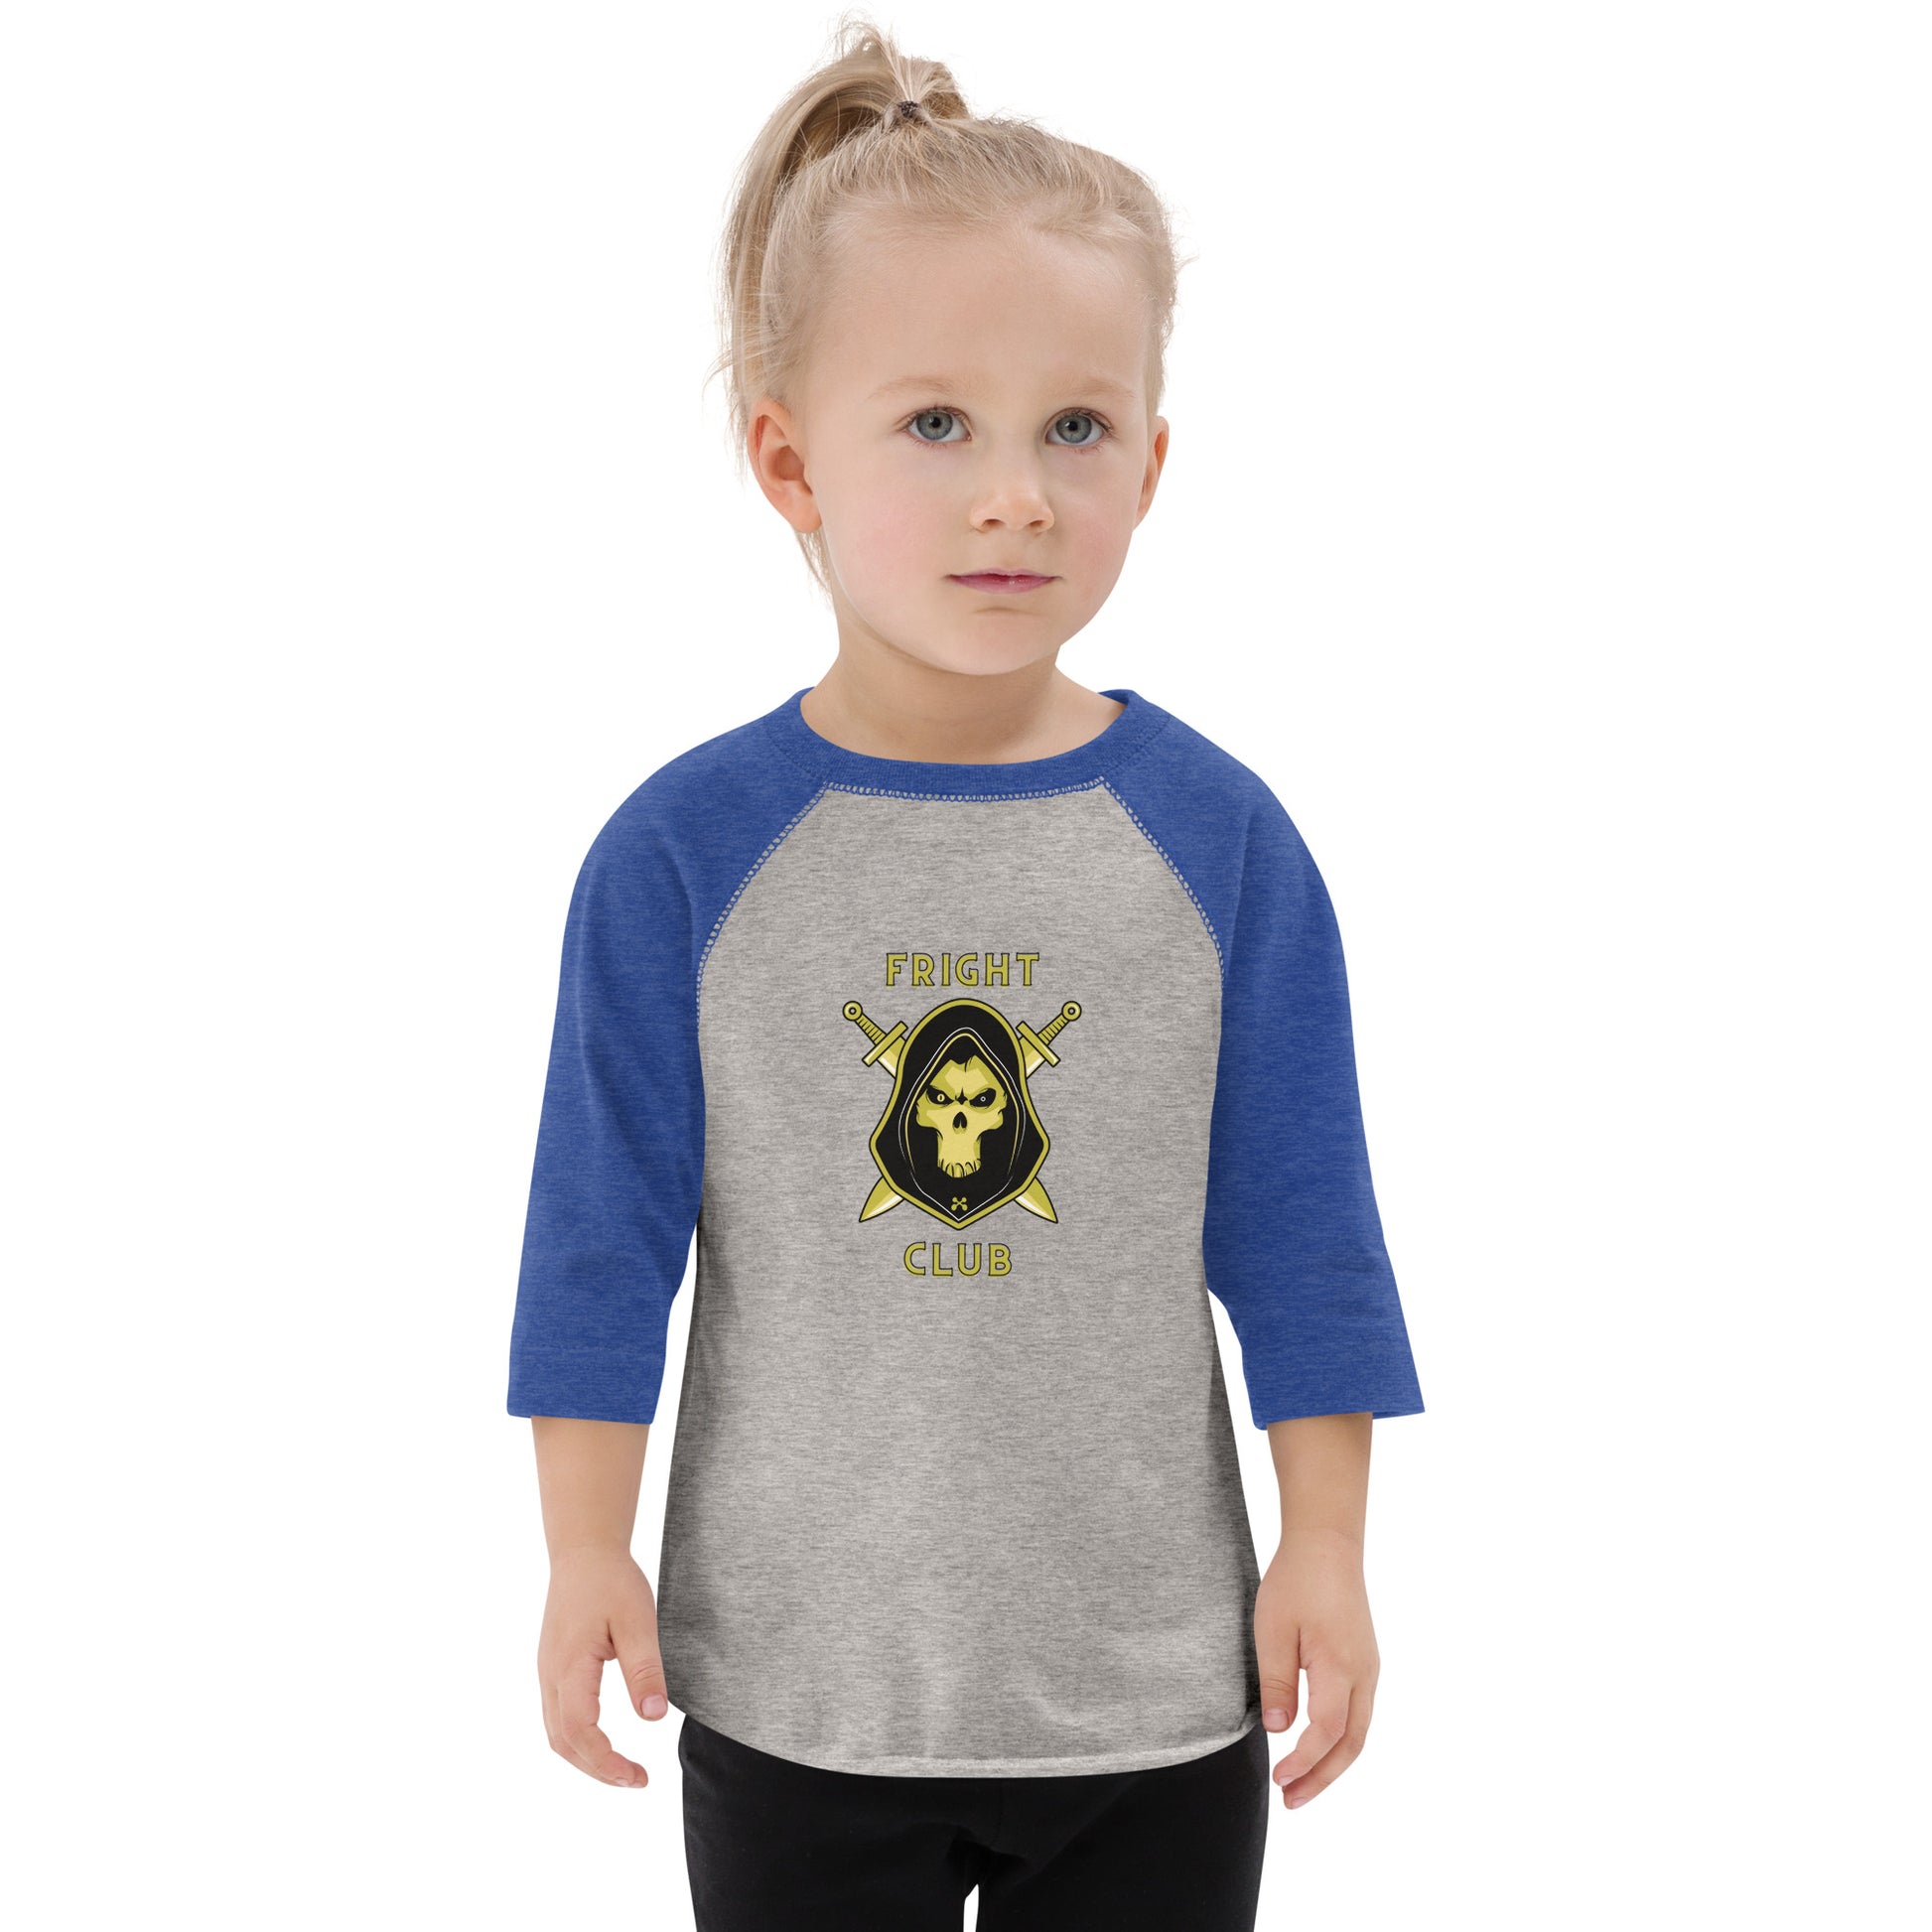 Fright Club Toddler baseball shirt - A. Mandaline Art